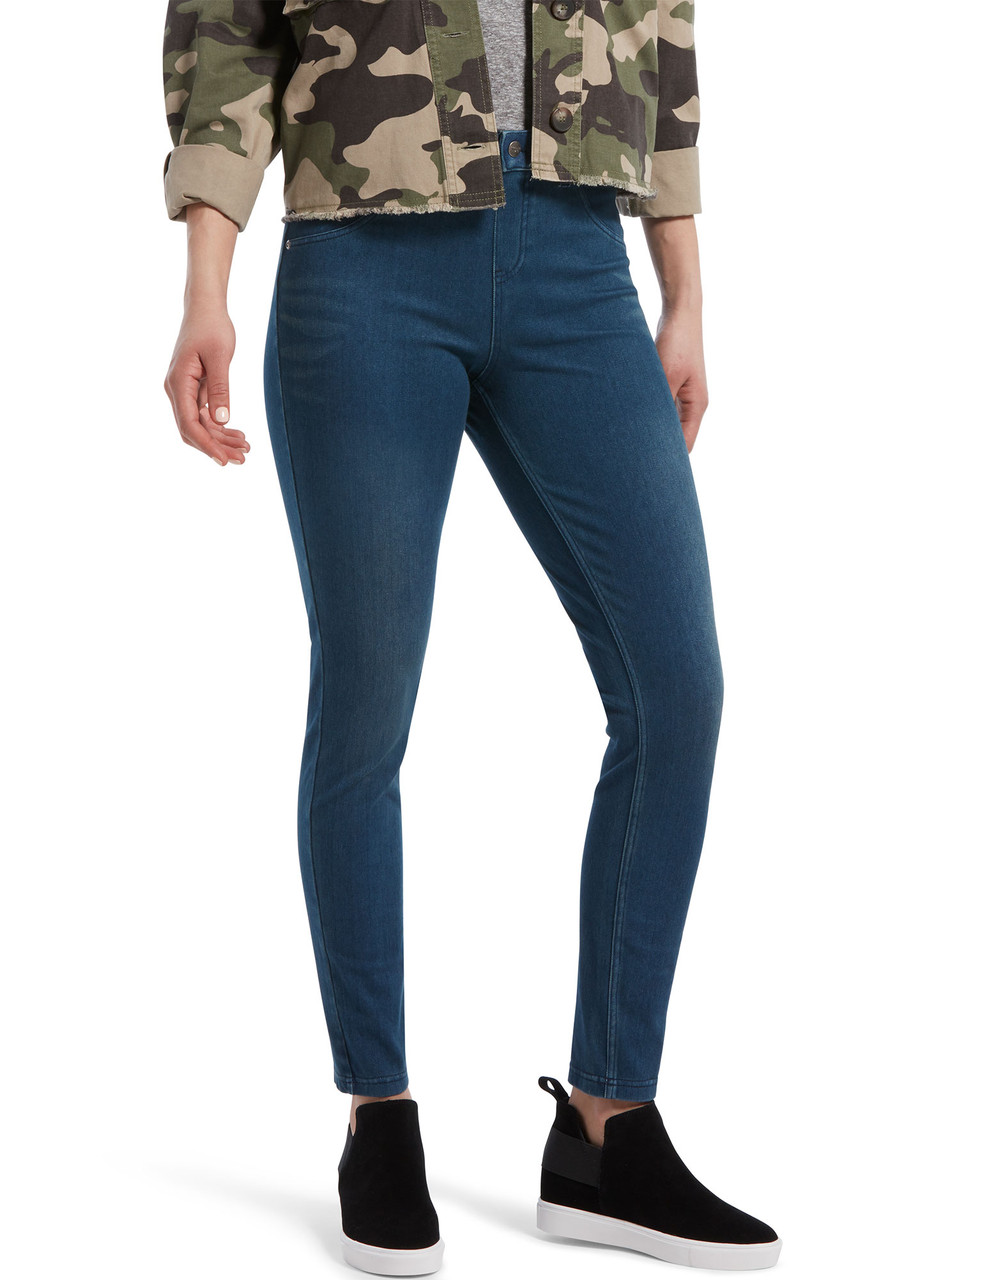 Best New! Vooveeya Jeggings For Women High Waist Skinny Fit Jeans